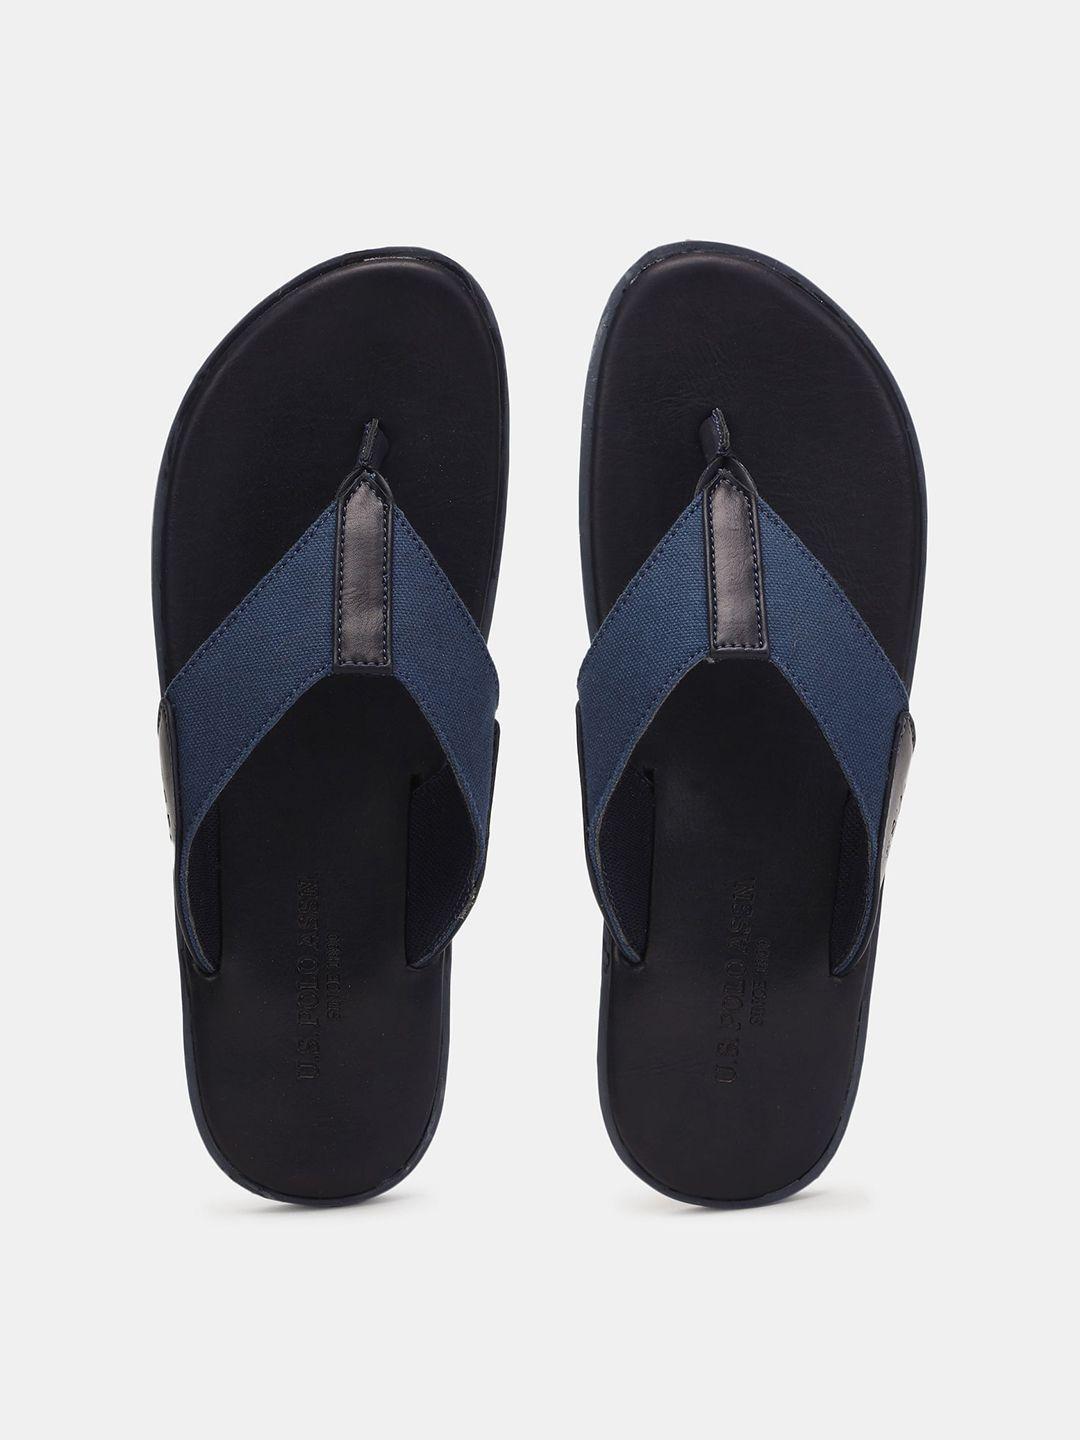 u s polo assn men navy blue leather comfort sandals